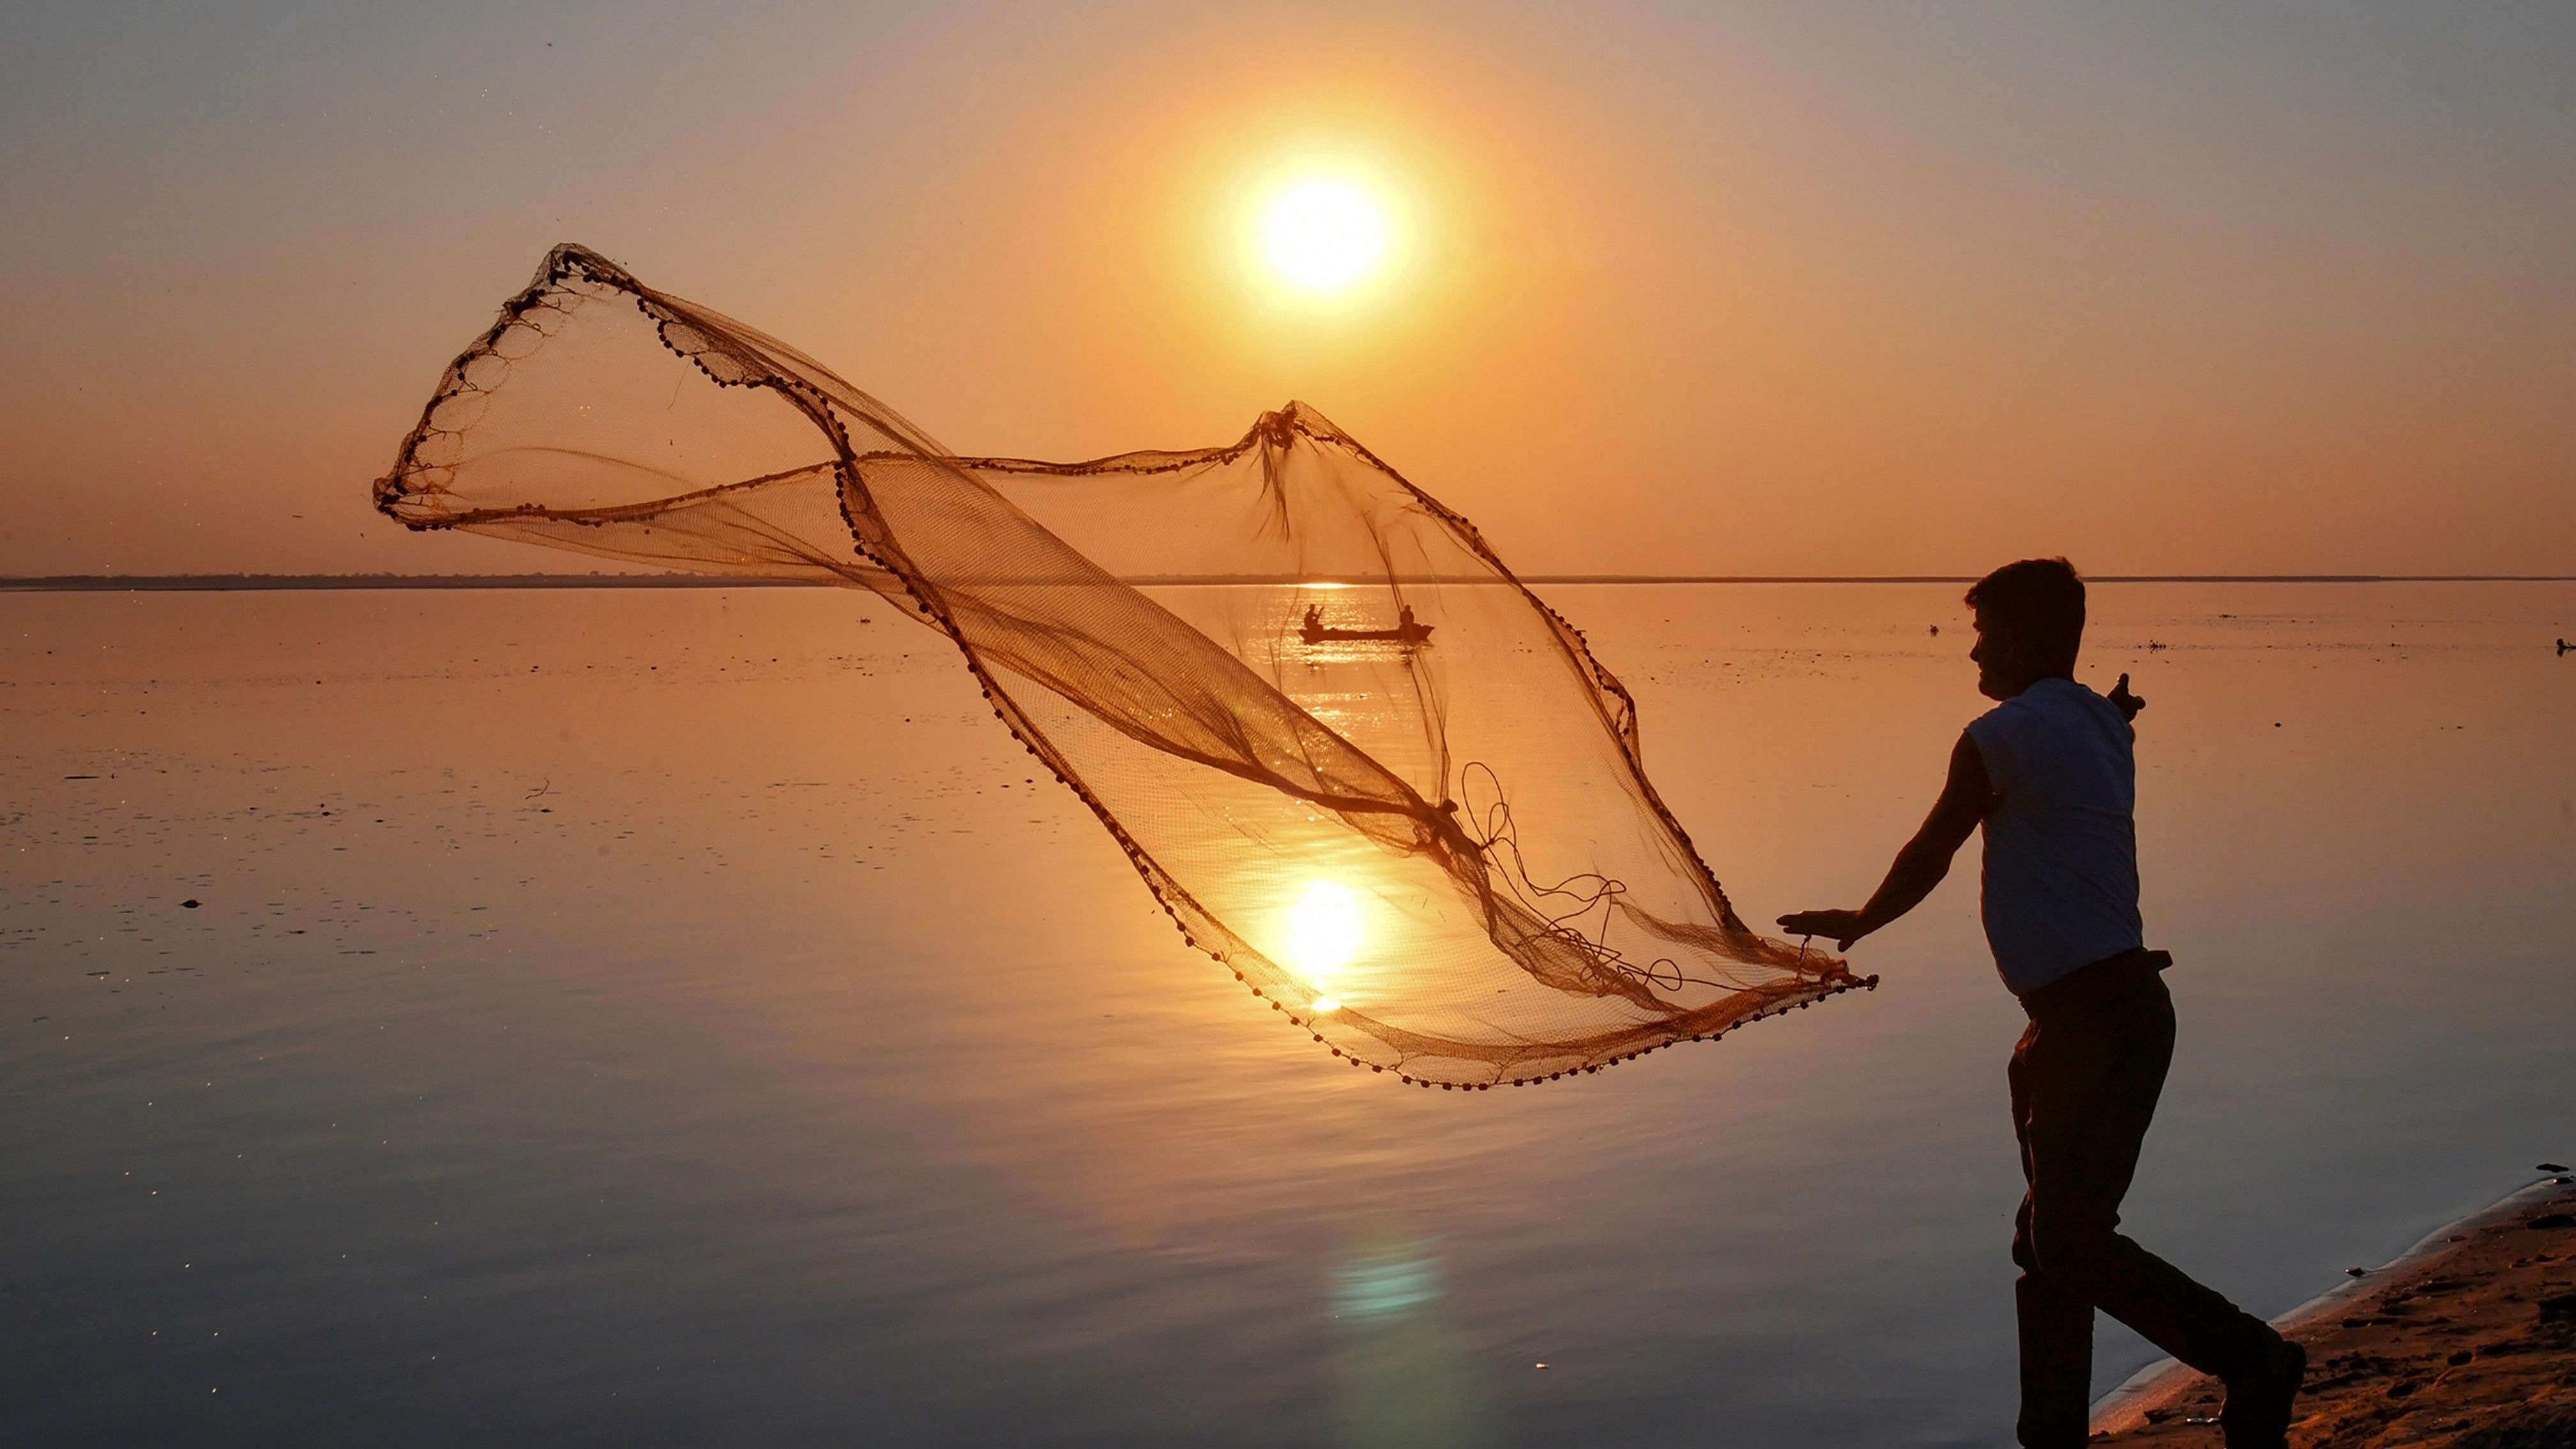 <div class="paragraphs"><p>Representative image showing a man casts fishing net.</p></div>